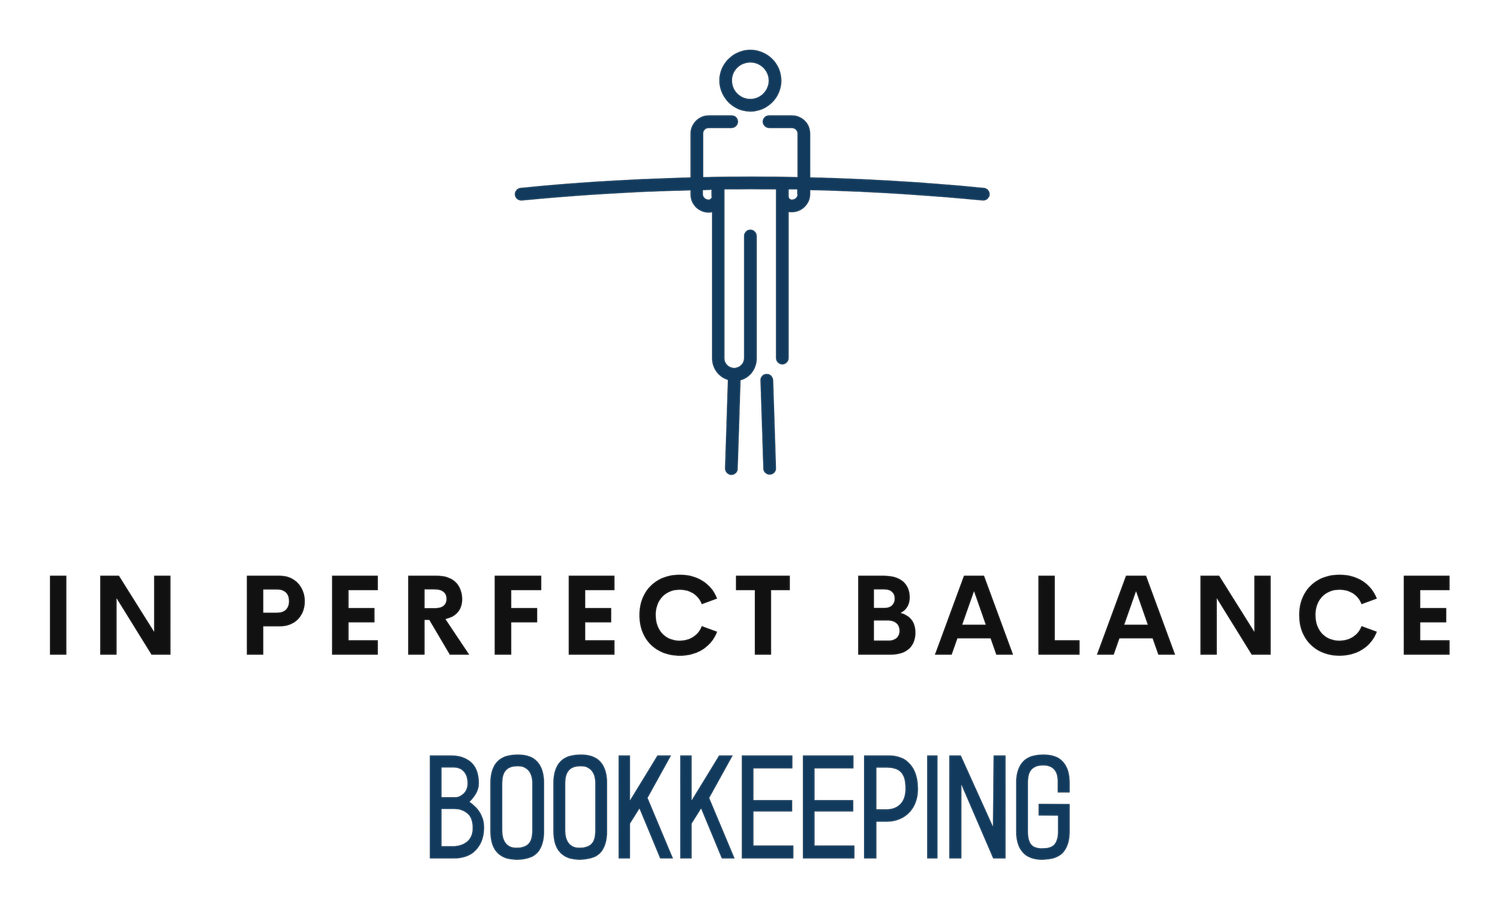 In Perfect Balance Bookkeeping, LLC